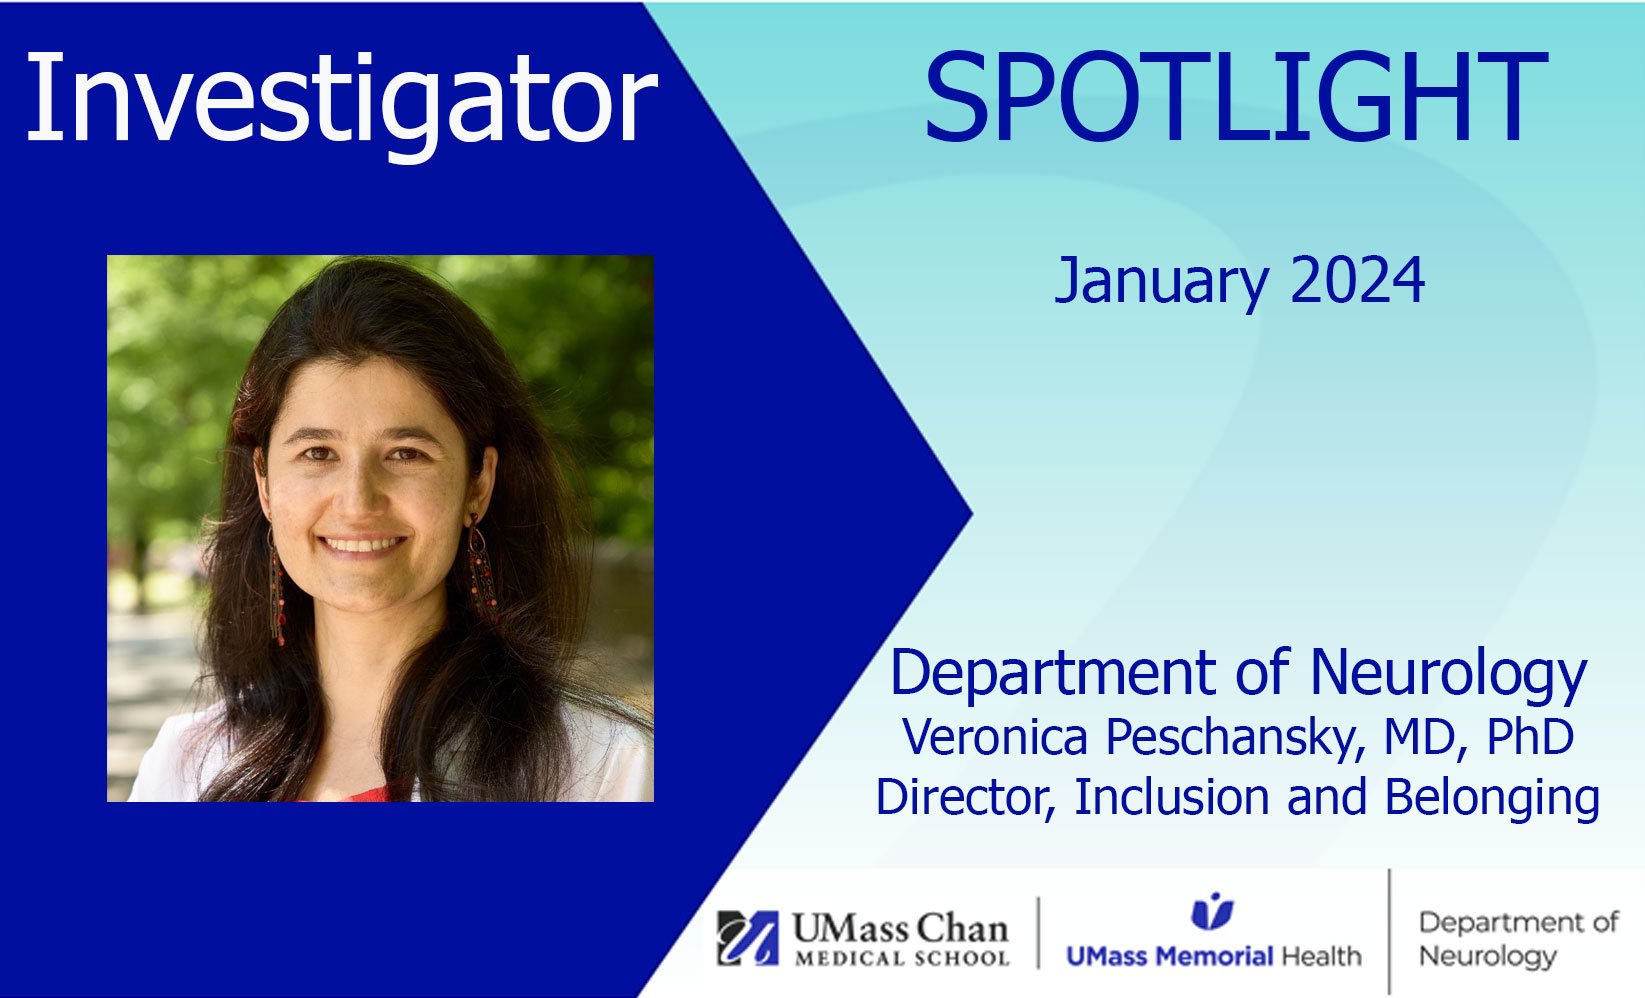 Veronica Peschansky, MD, PhD, Investigator Spotlight, Director of Inclusion and Belonging for Neurology, January 2024